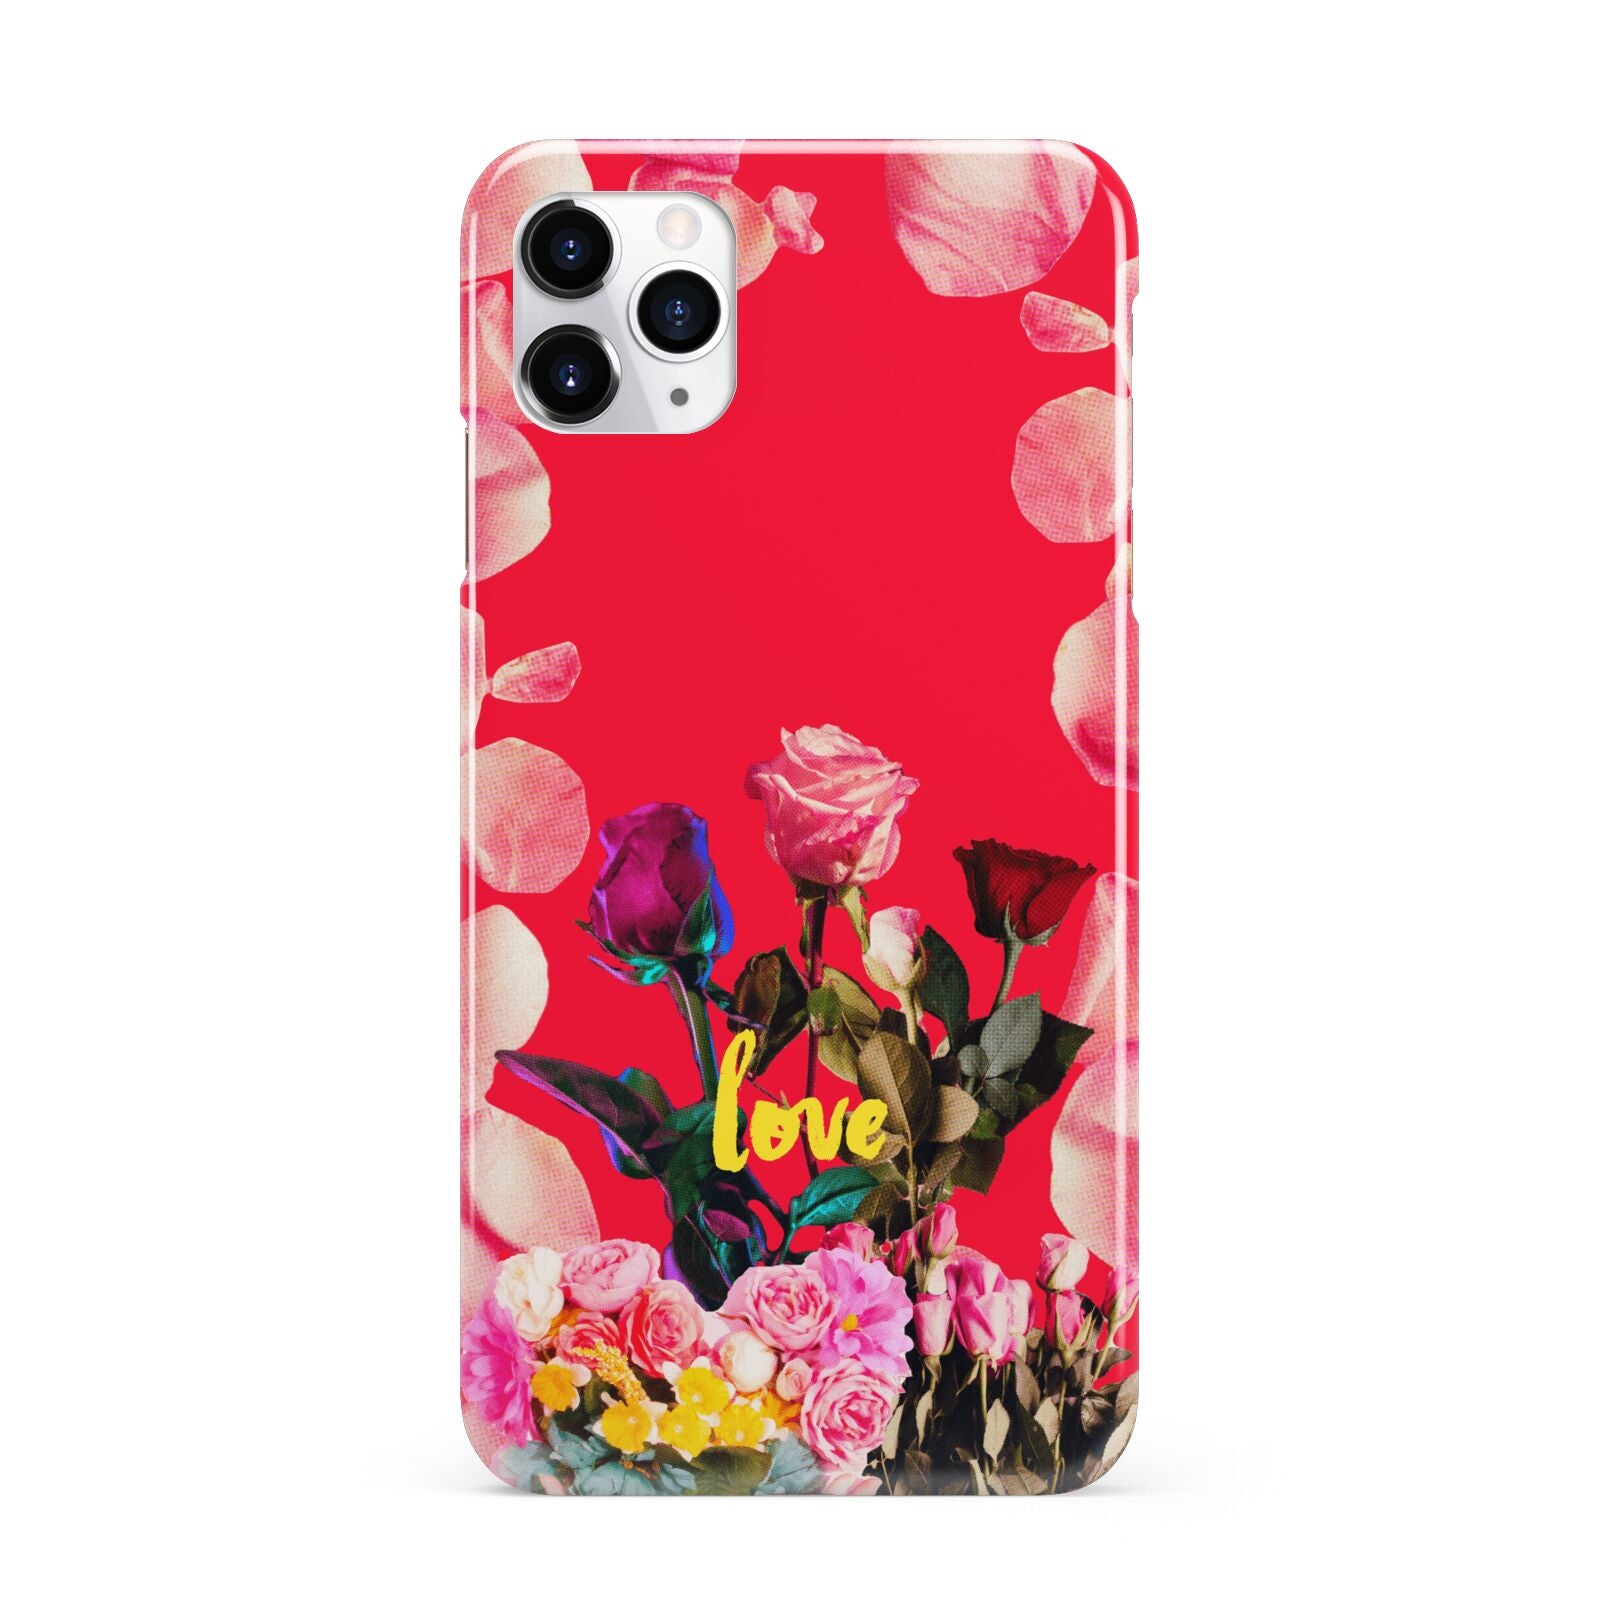 Retro Floral Valentine iPhone 11 Pro Max 3D Snap Case